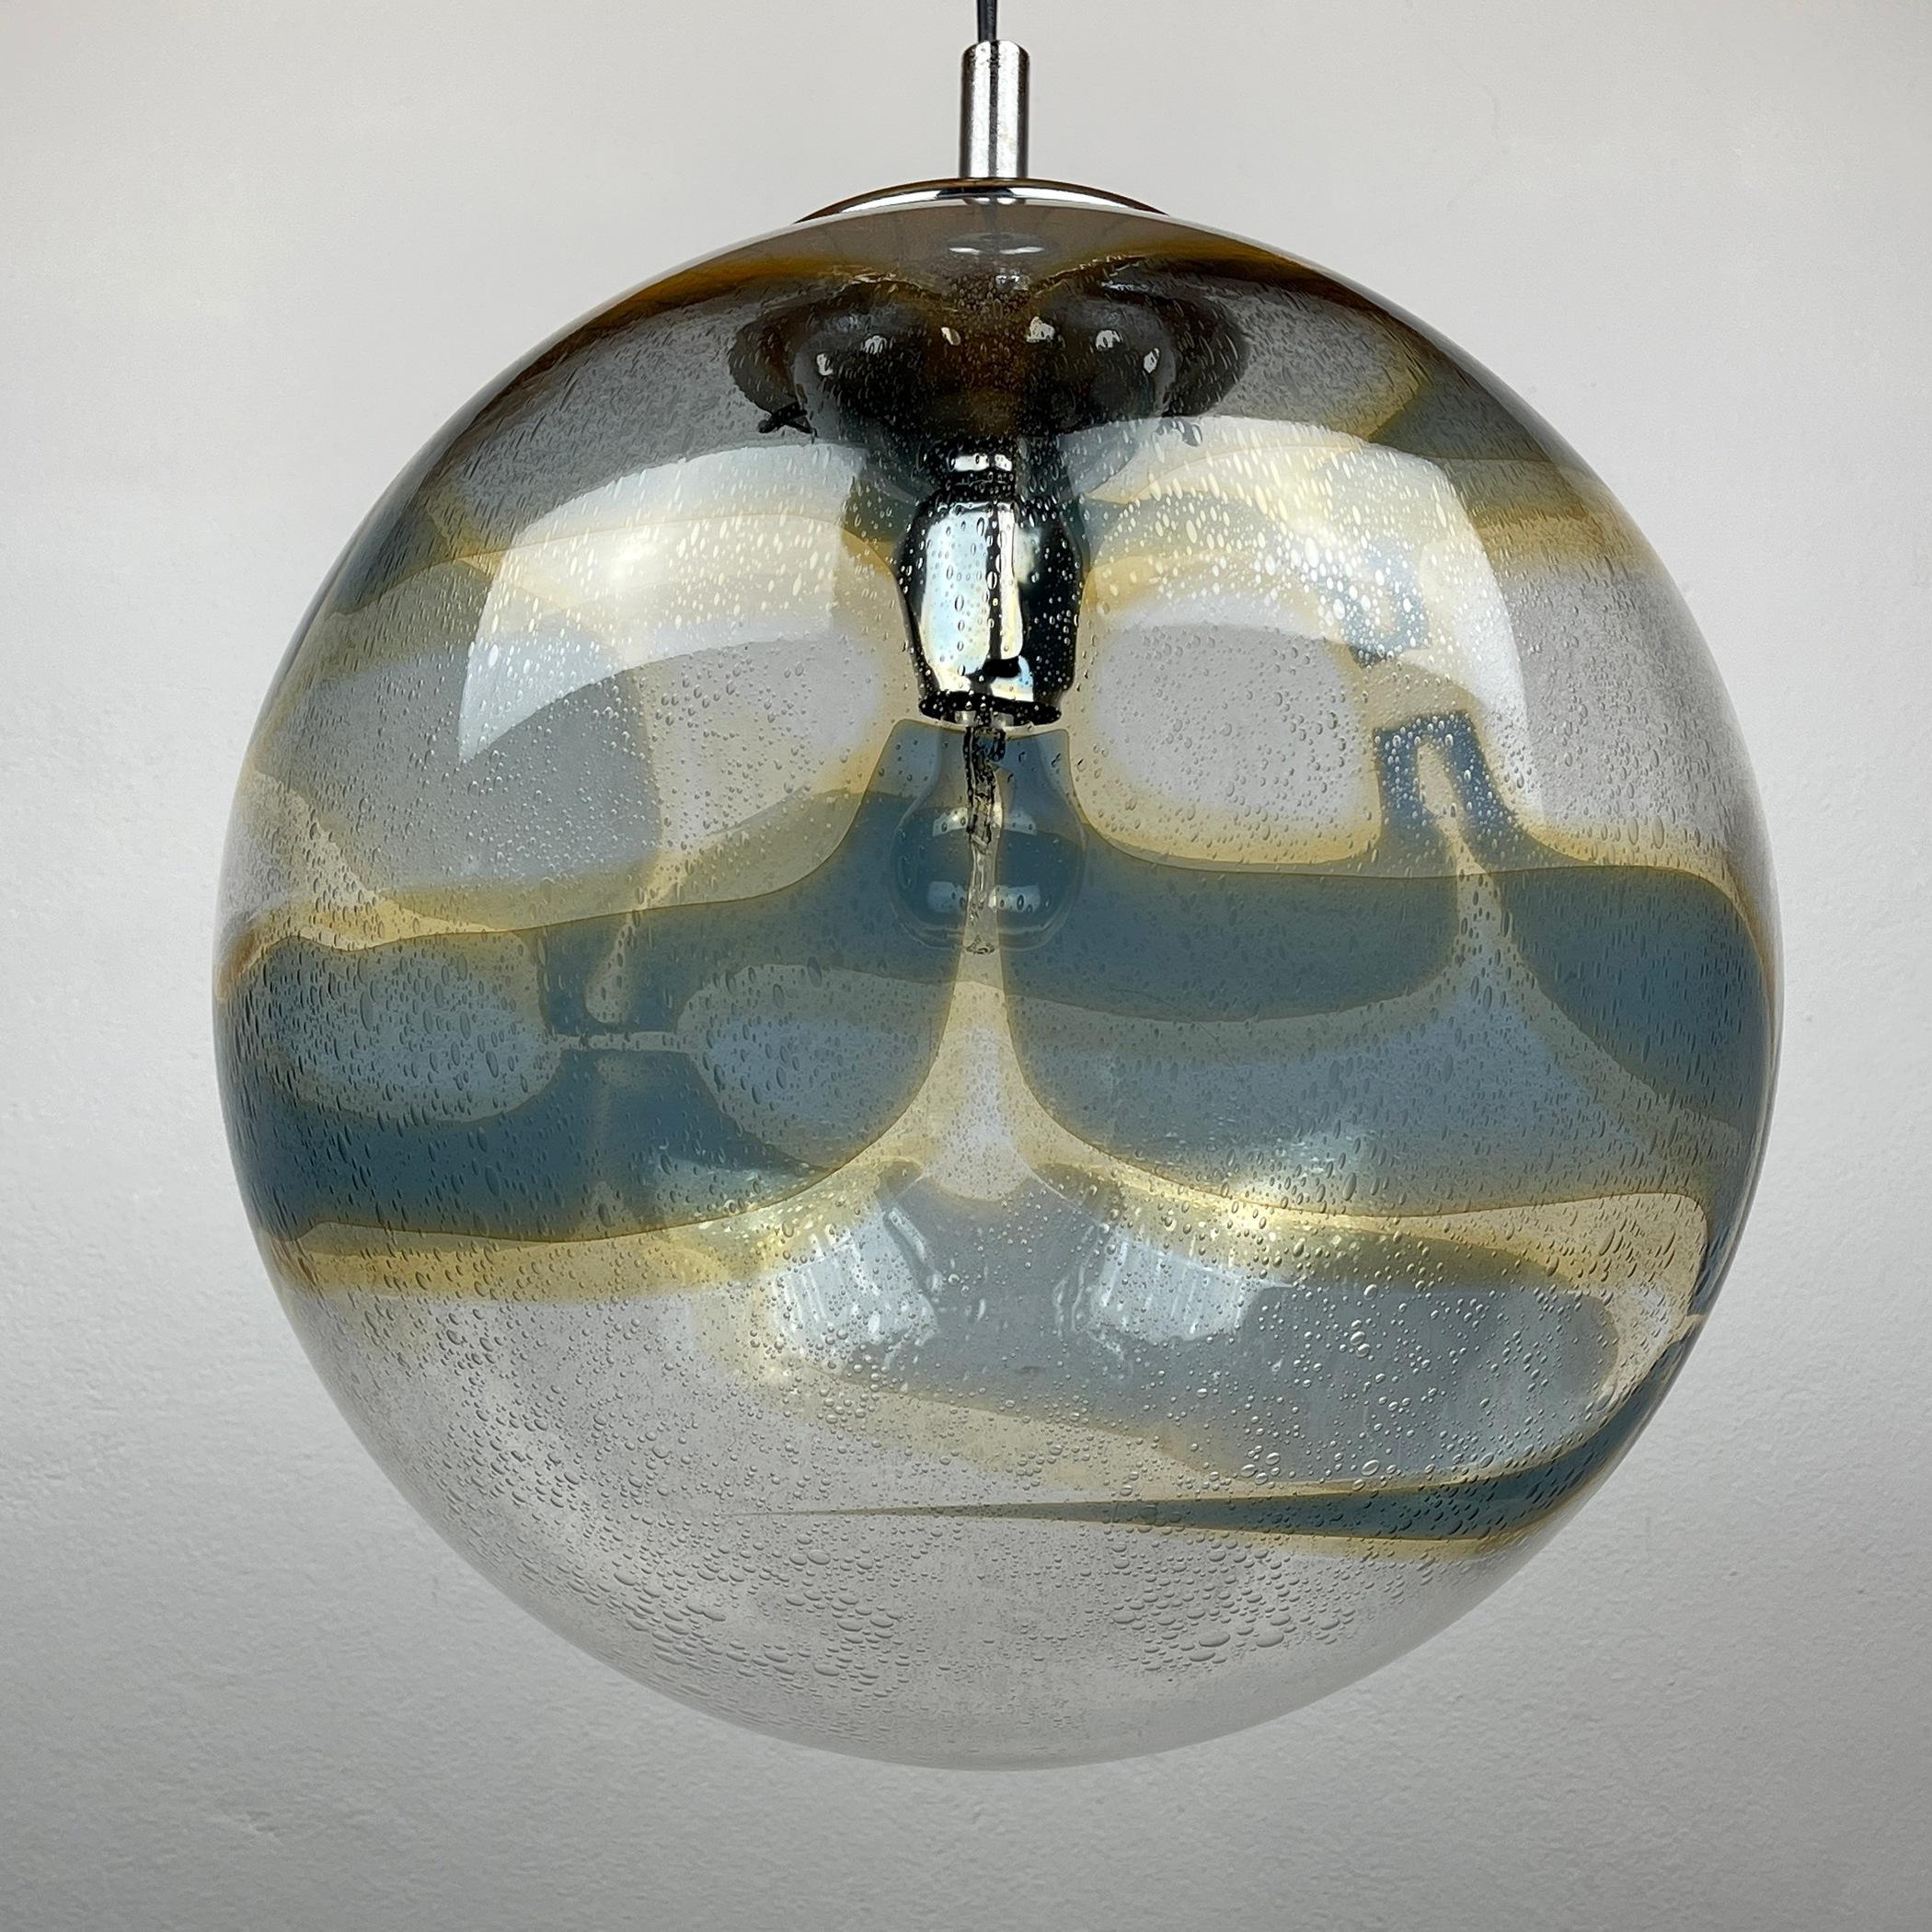 Italian Vintage Xl Swirled Murano Glass Pendant Lamp by Vistosi Italy, 1970s For Sale